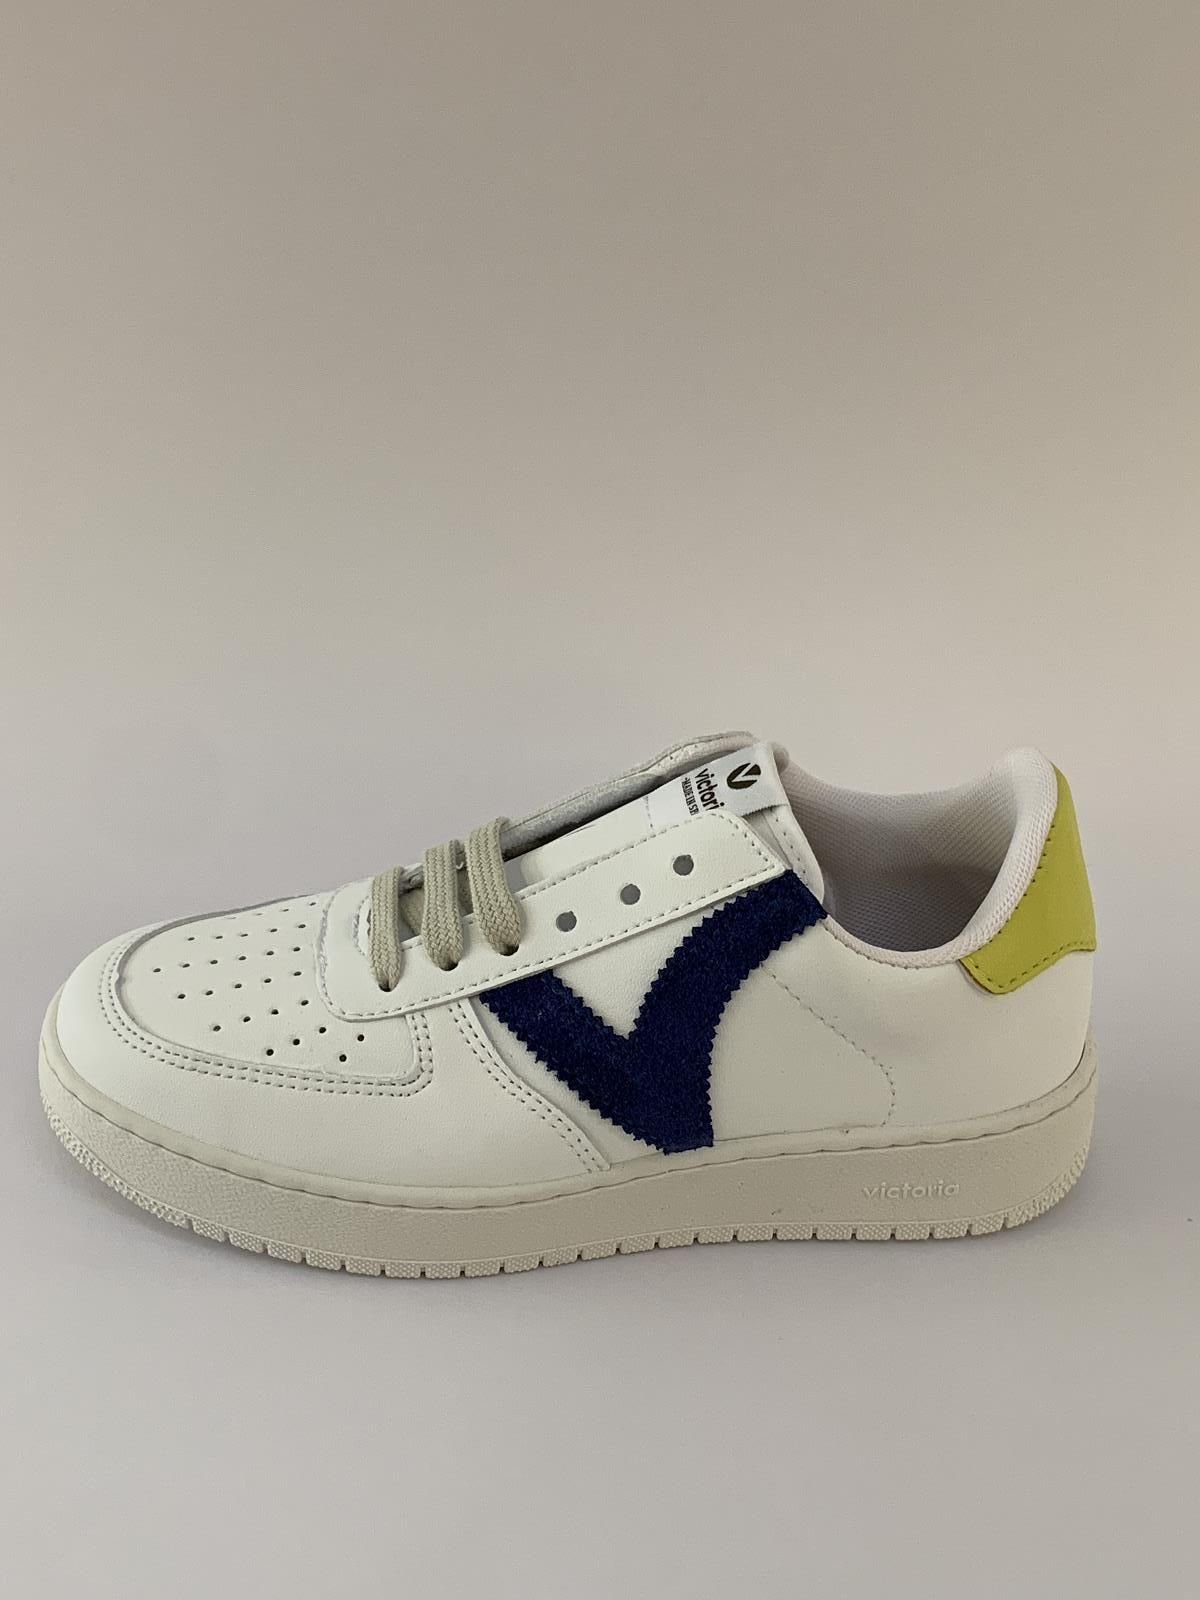 Victoria Sneaker Wit+kleur unisex (Sneaker Force Blauw - 258201) - Schoenen Luca